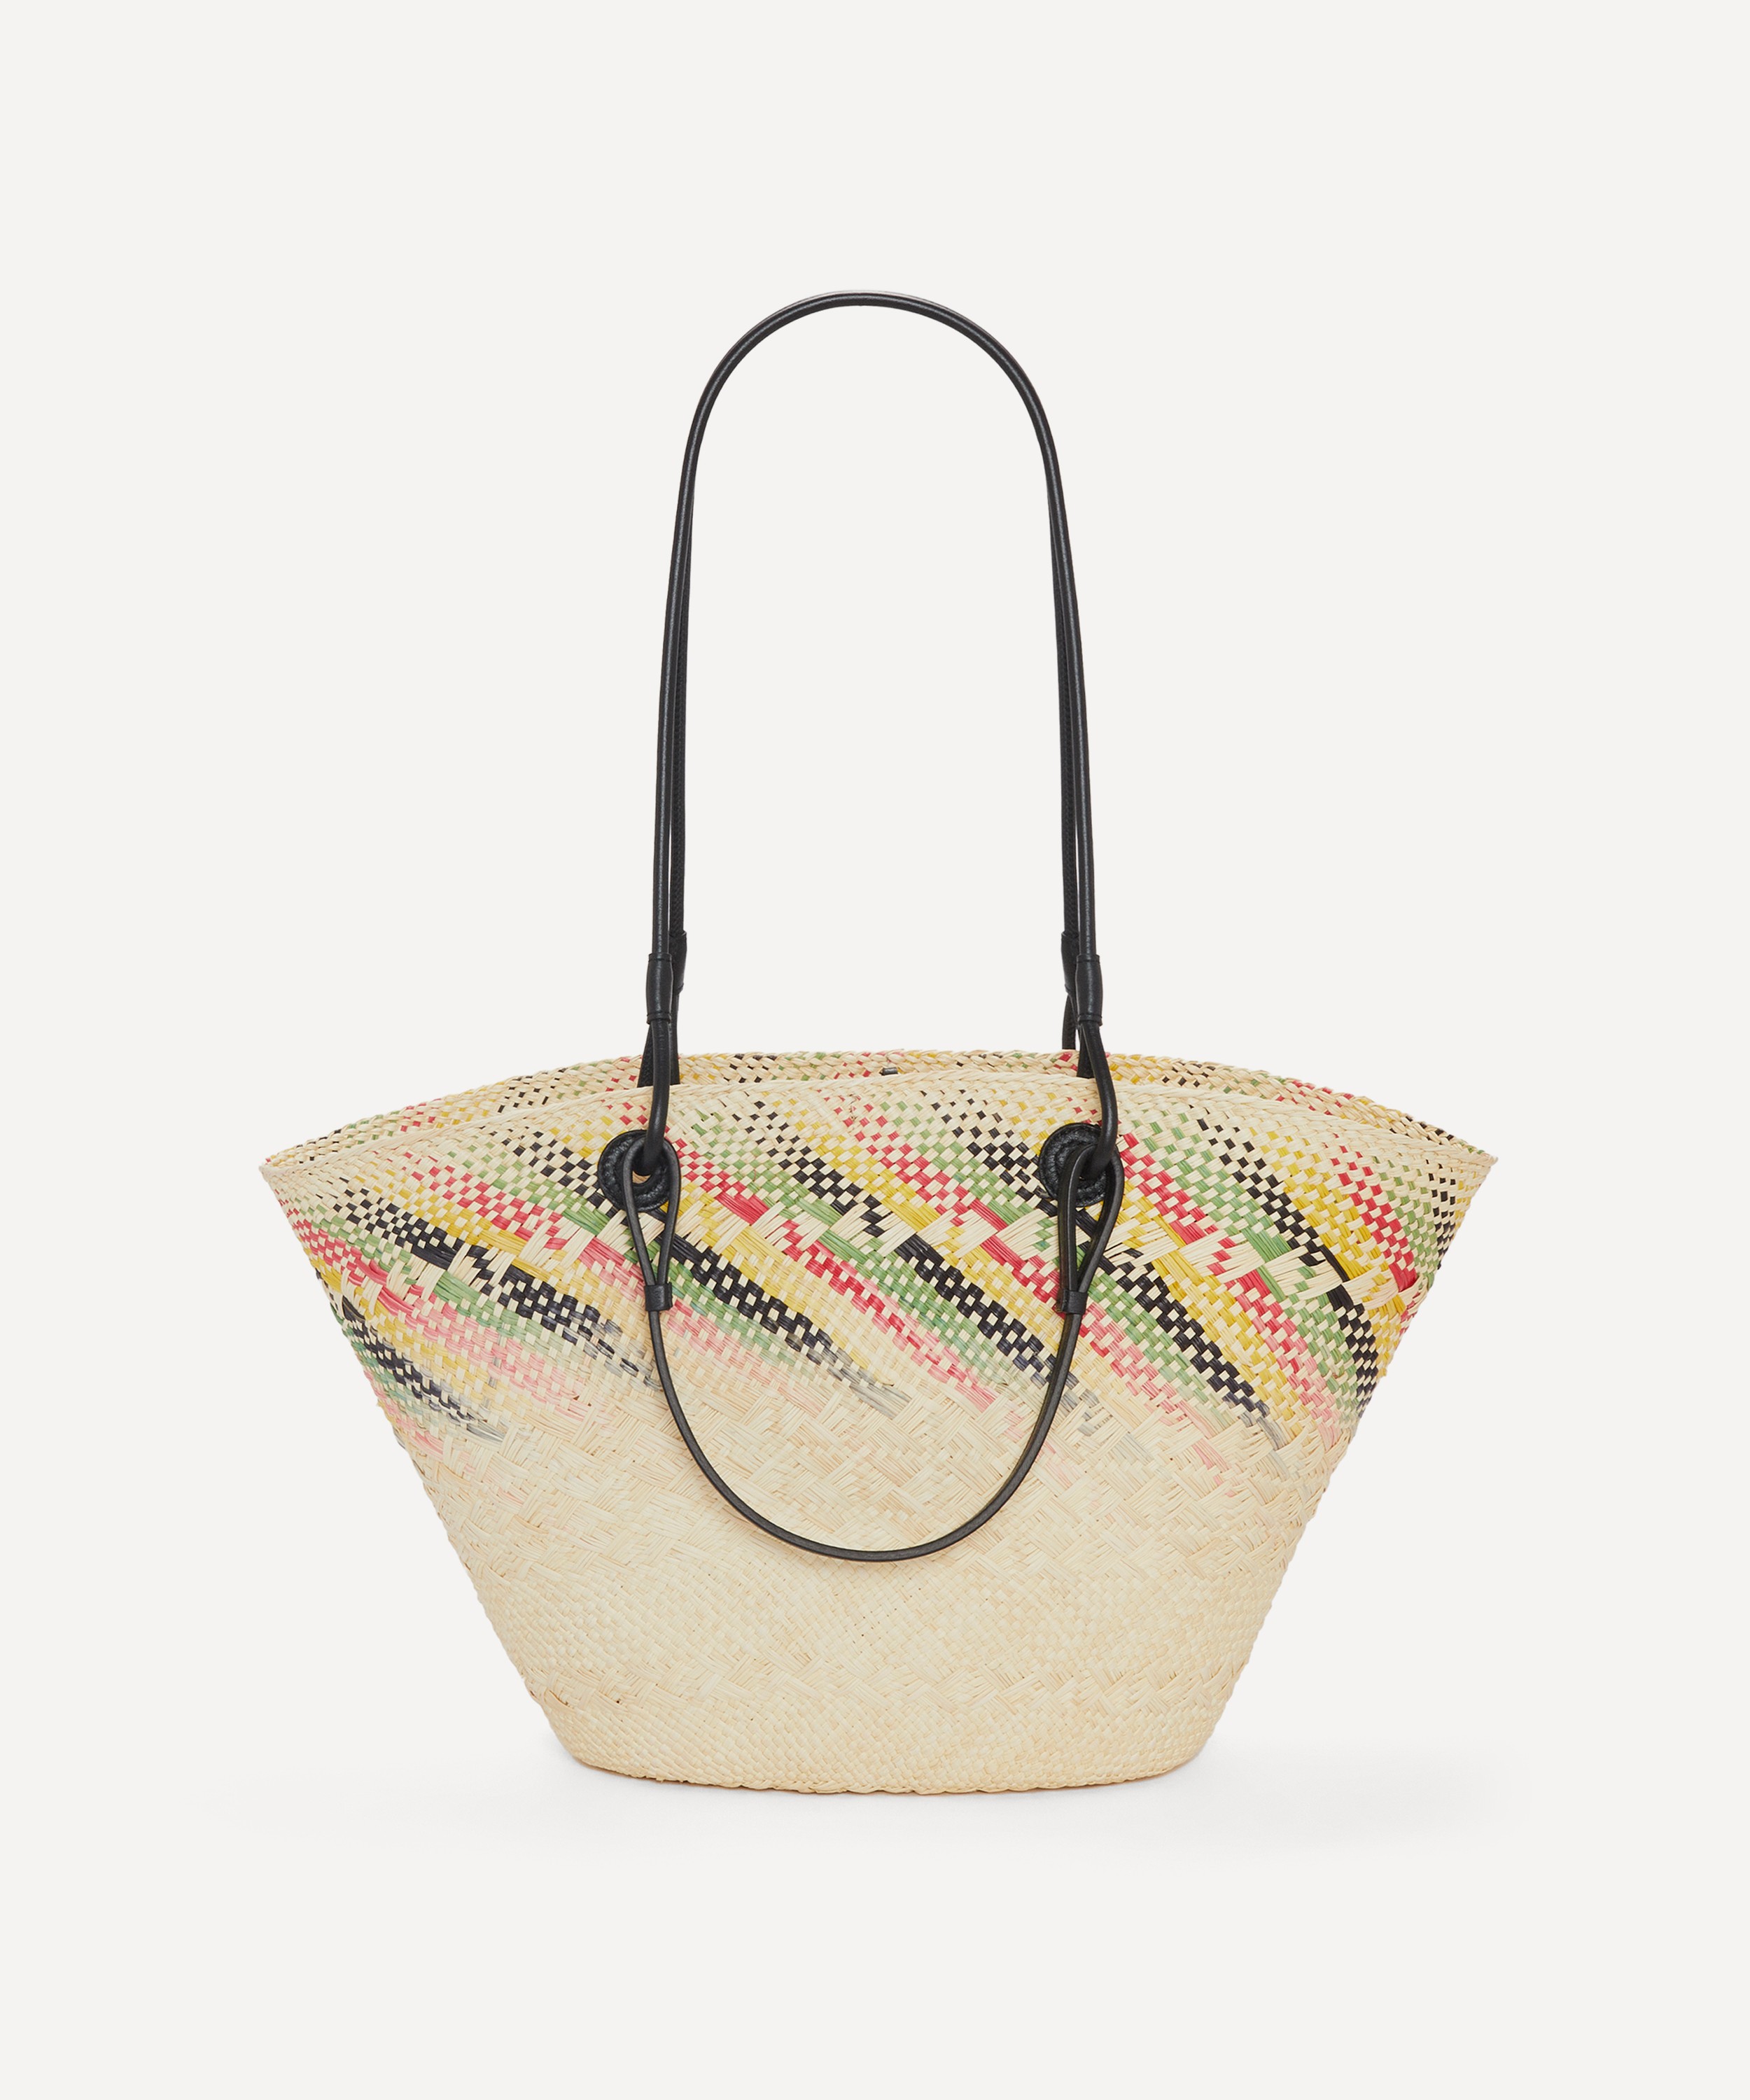 Loewe Women's Small Anagram Basket Shoulder Bag